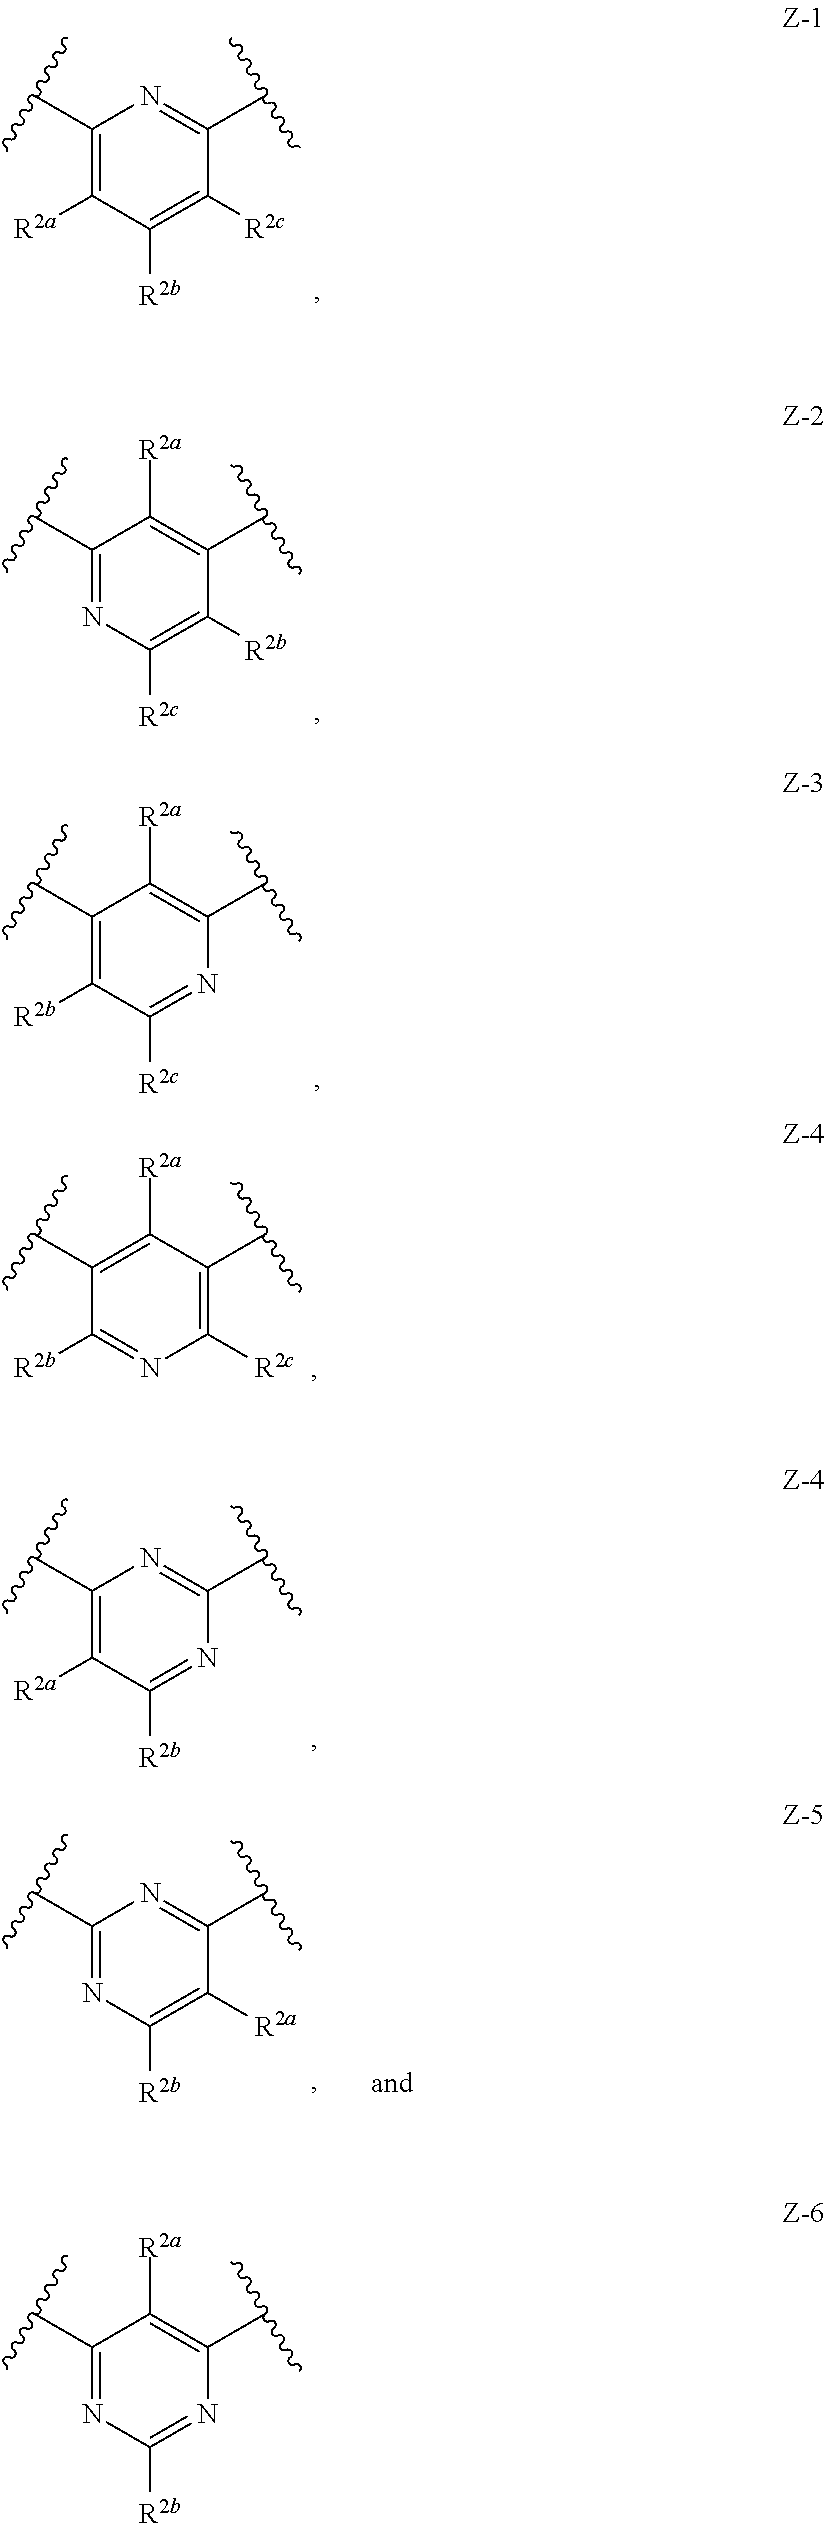 Quaternized amines as sodium channel blockers